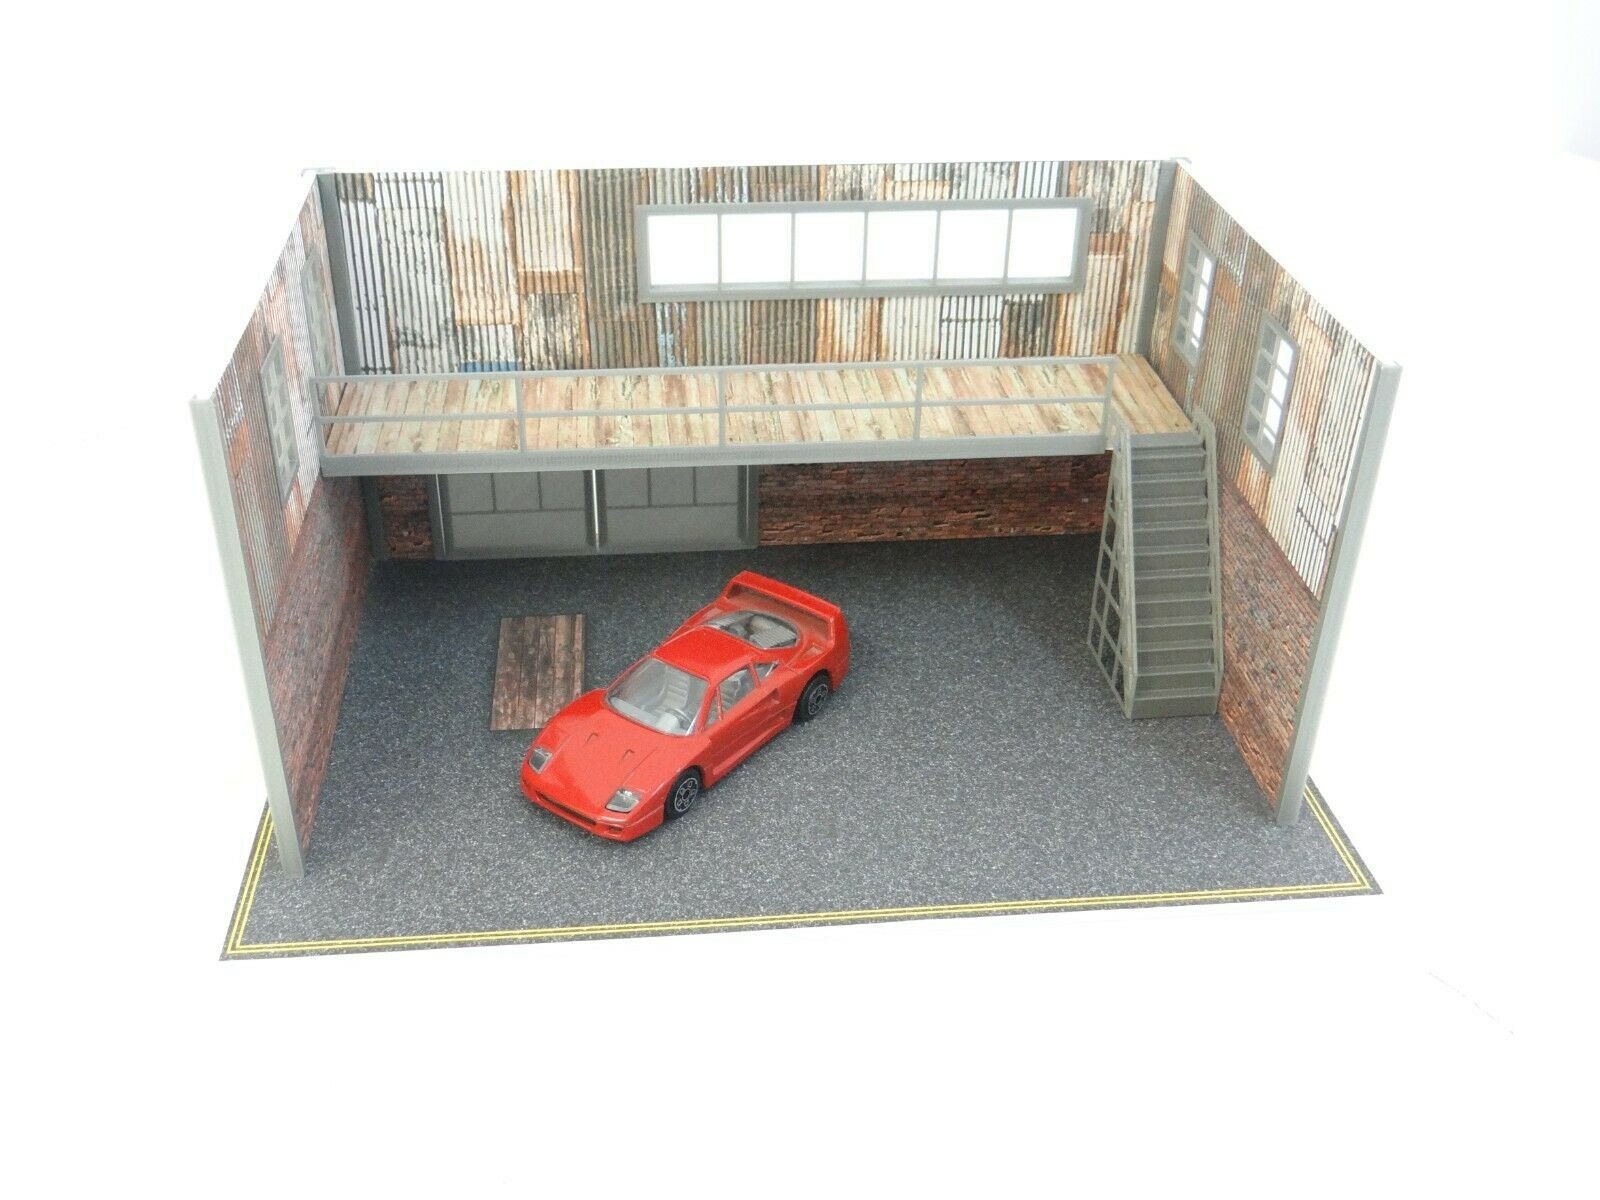 Scale 1:43 Brick Garage Auto Service and Repair Diorama Model Kit